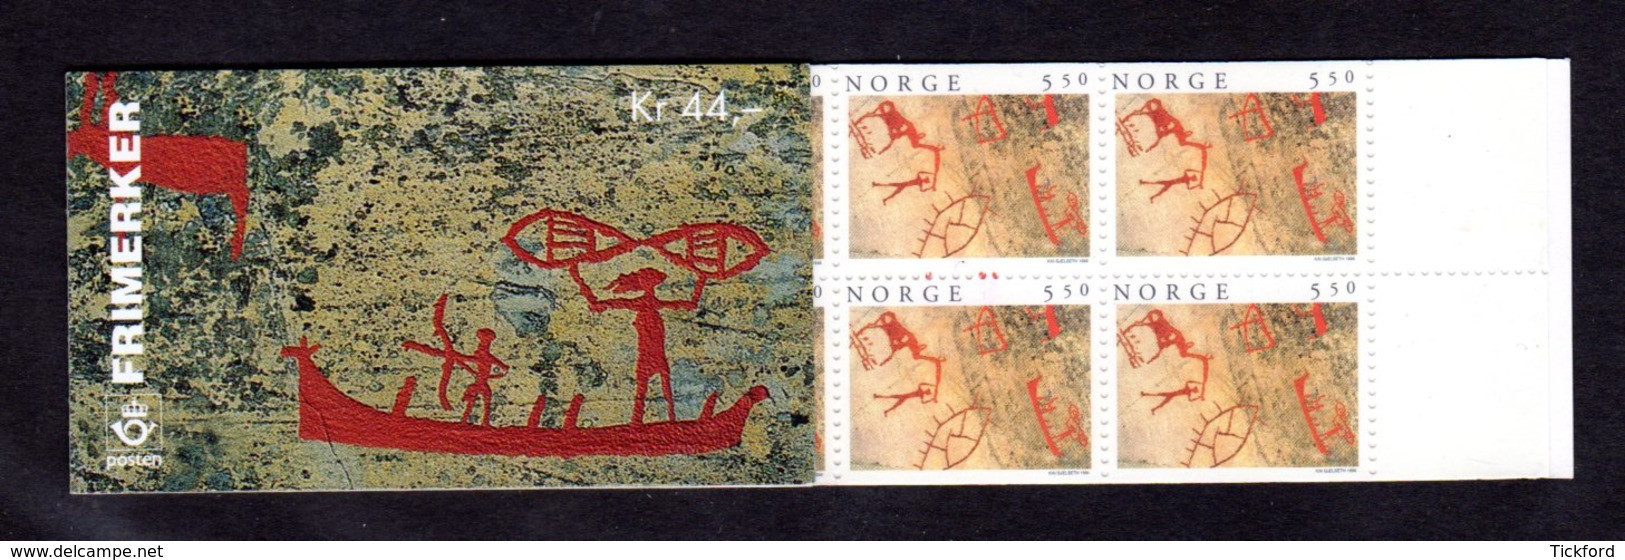 NORVEGE 1996 - CARNET Yvert C1165 - Facit H92 - NEUF** MNH - Tourisme, Peintures Rupestres D'Alta - Booklets